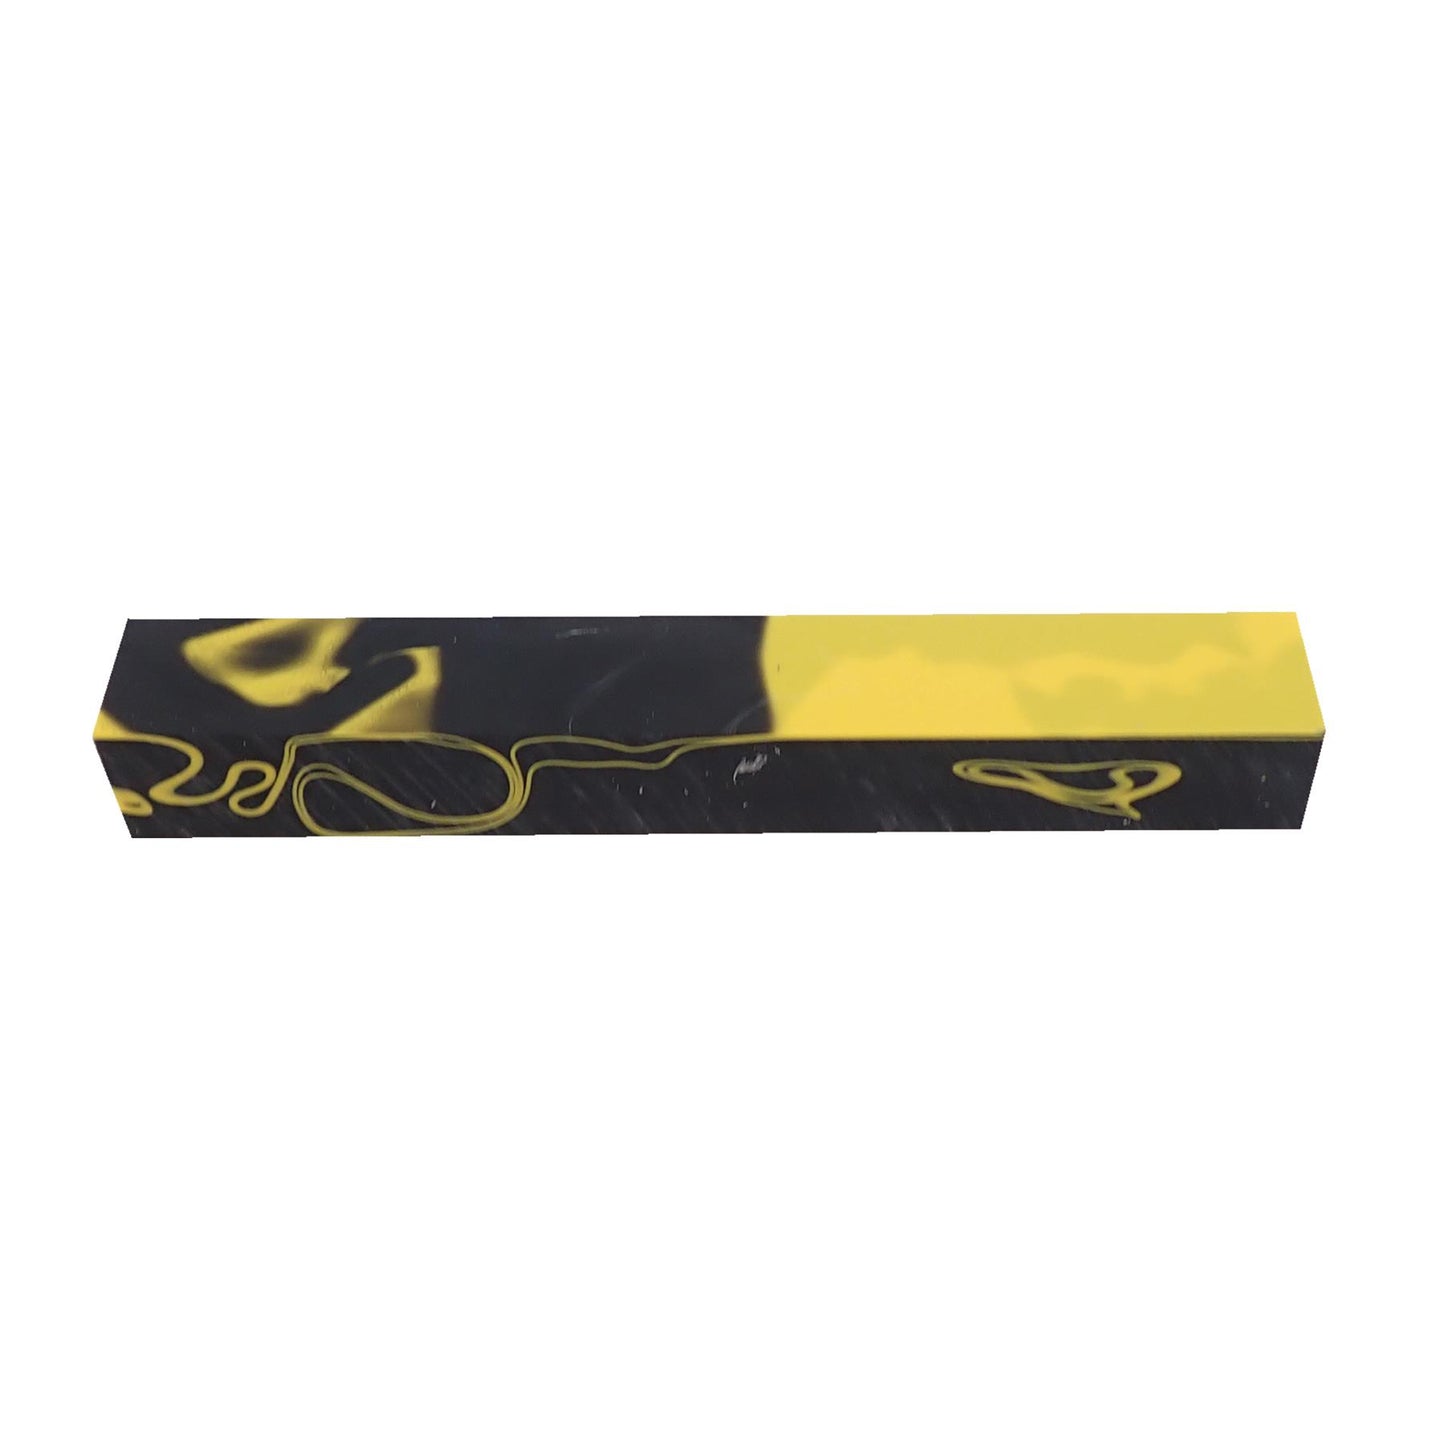 Turners' Mill Yellow Jacket Abstract Kirinite Acrylic Pen Blank - 150x20x20mm (6x3/4x3/4")